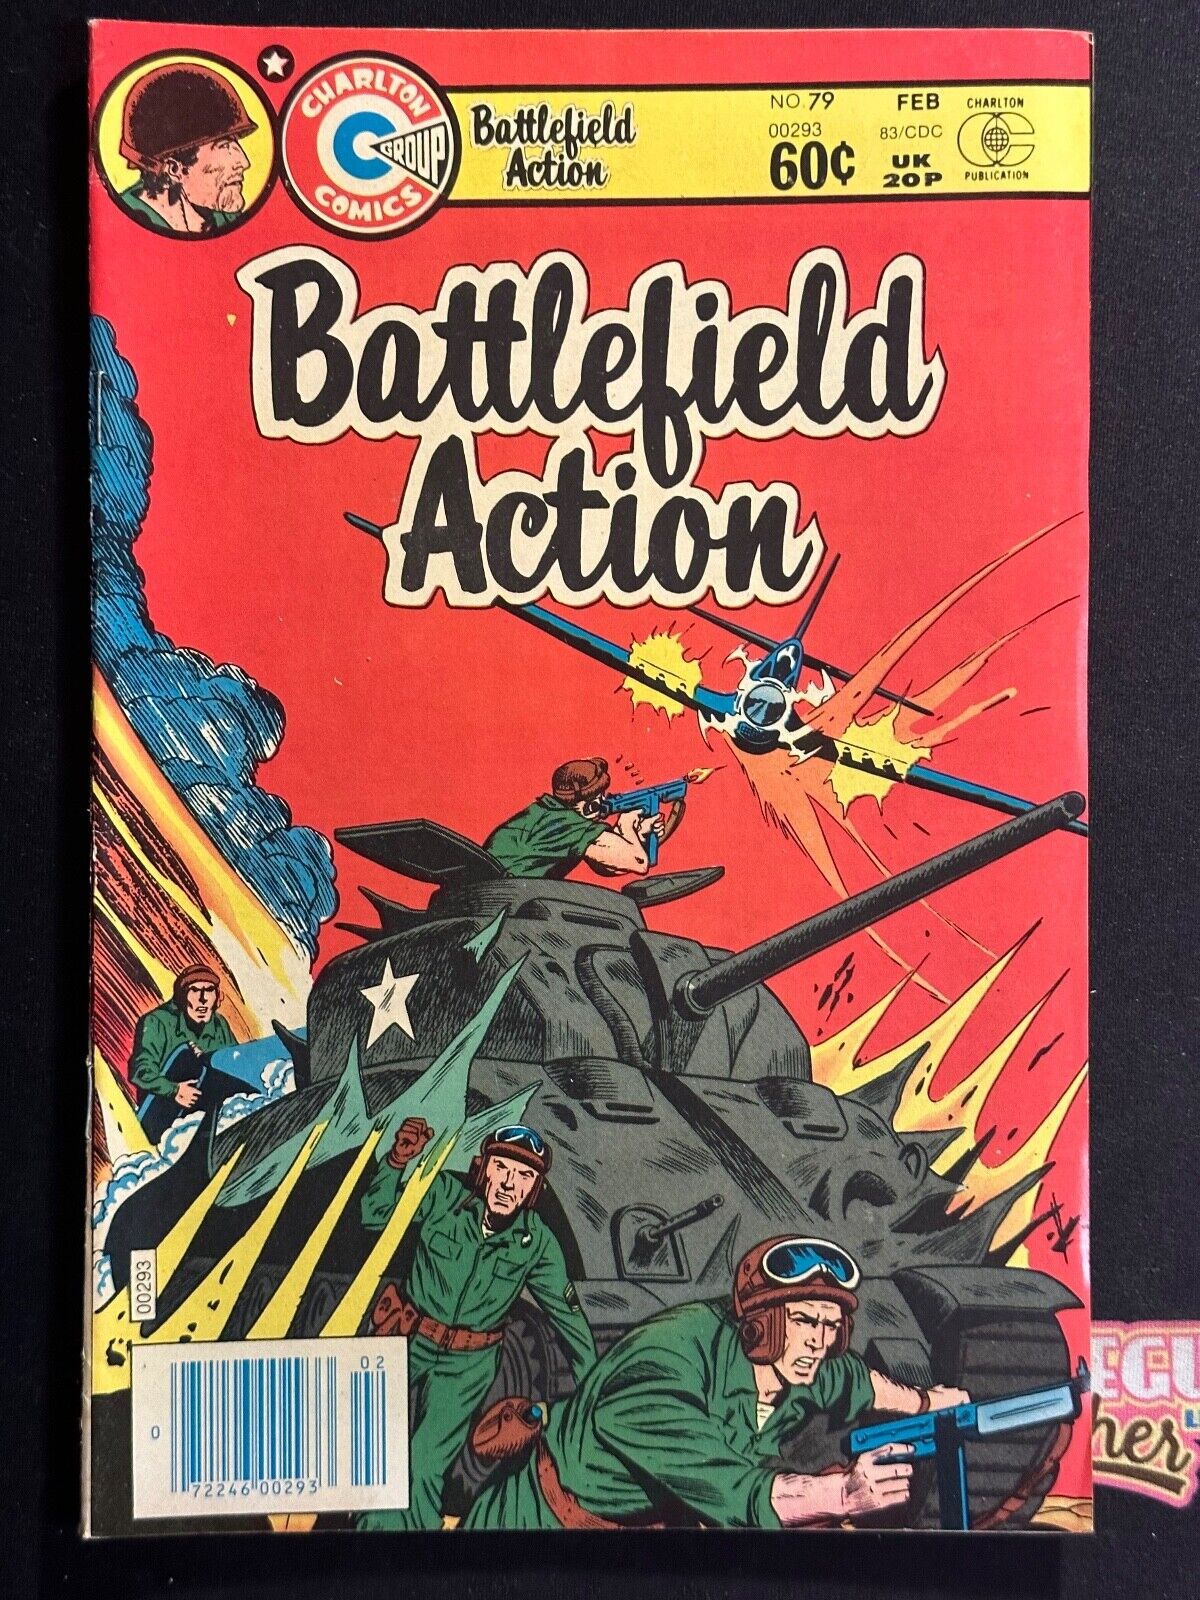 1983 Charlton Comics Battlefield Action #79